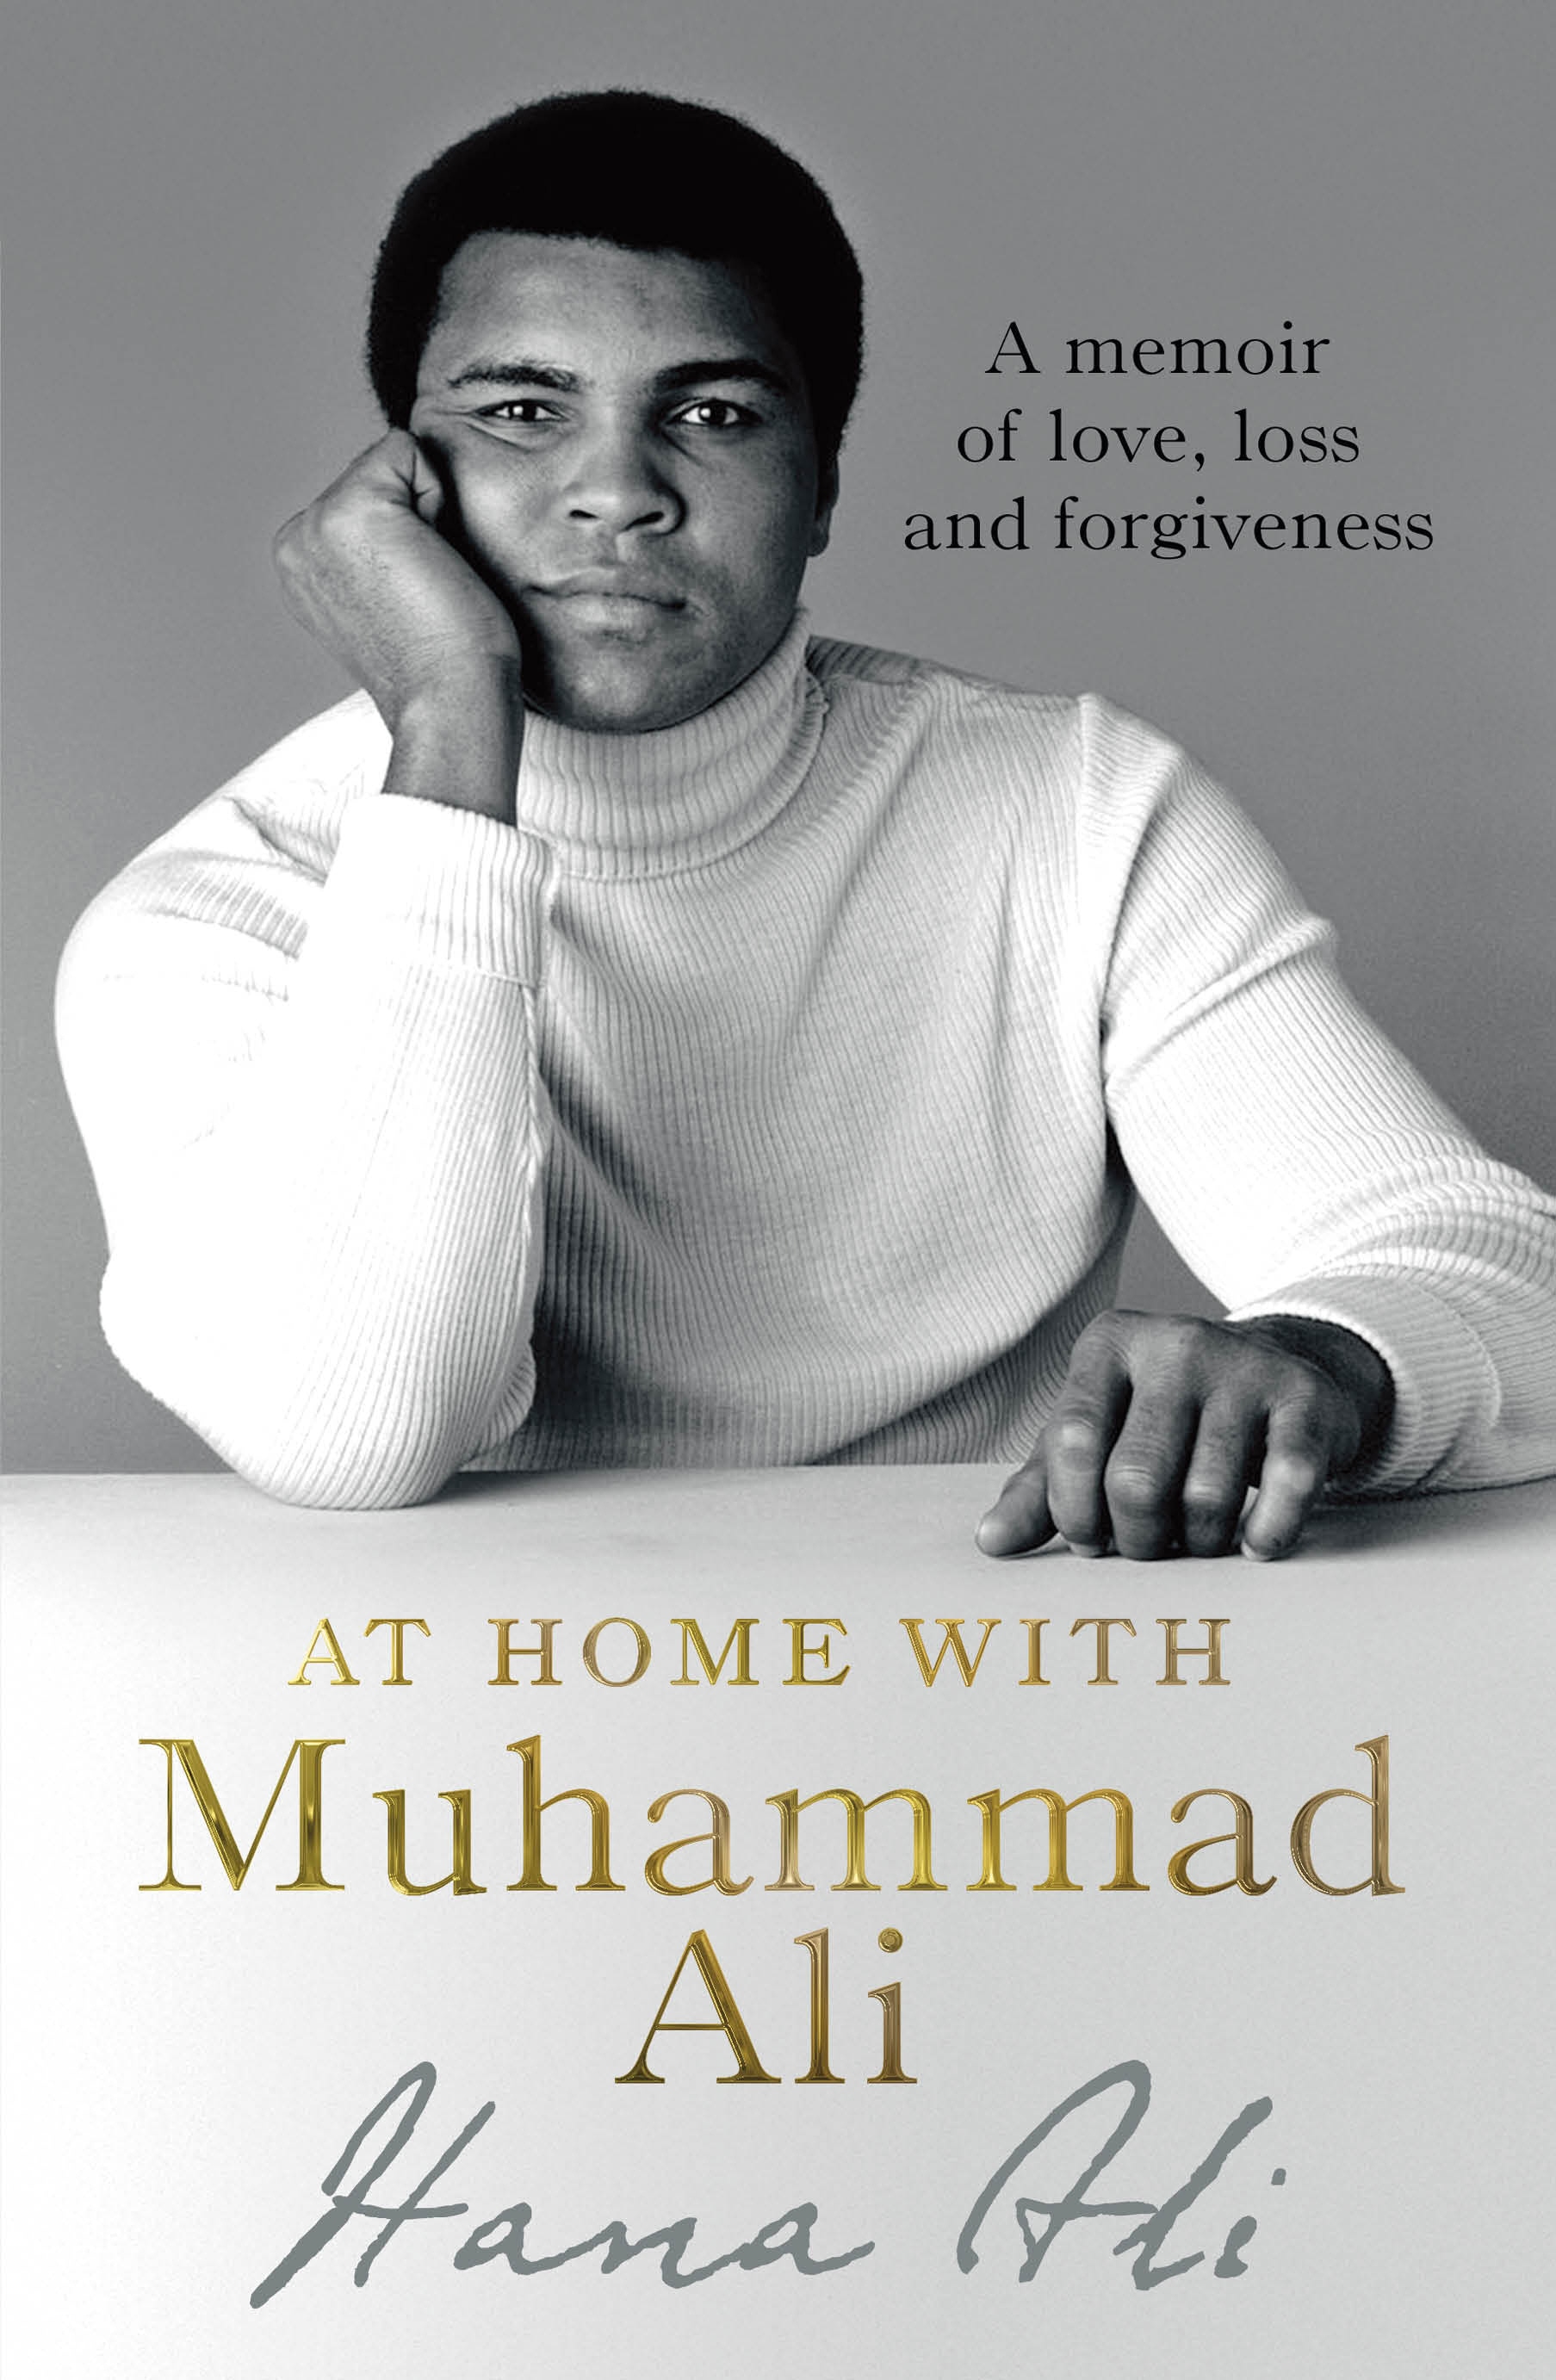 Book “At Home with Muhammad Ali” by Hana Yasmeen Ali — September 19, 2019